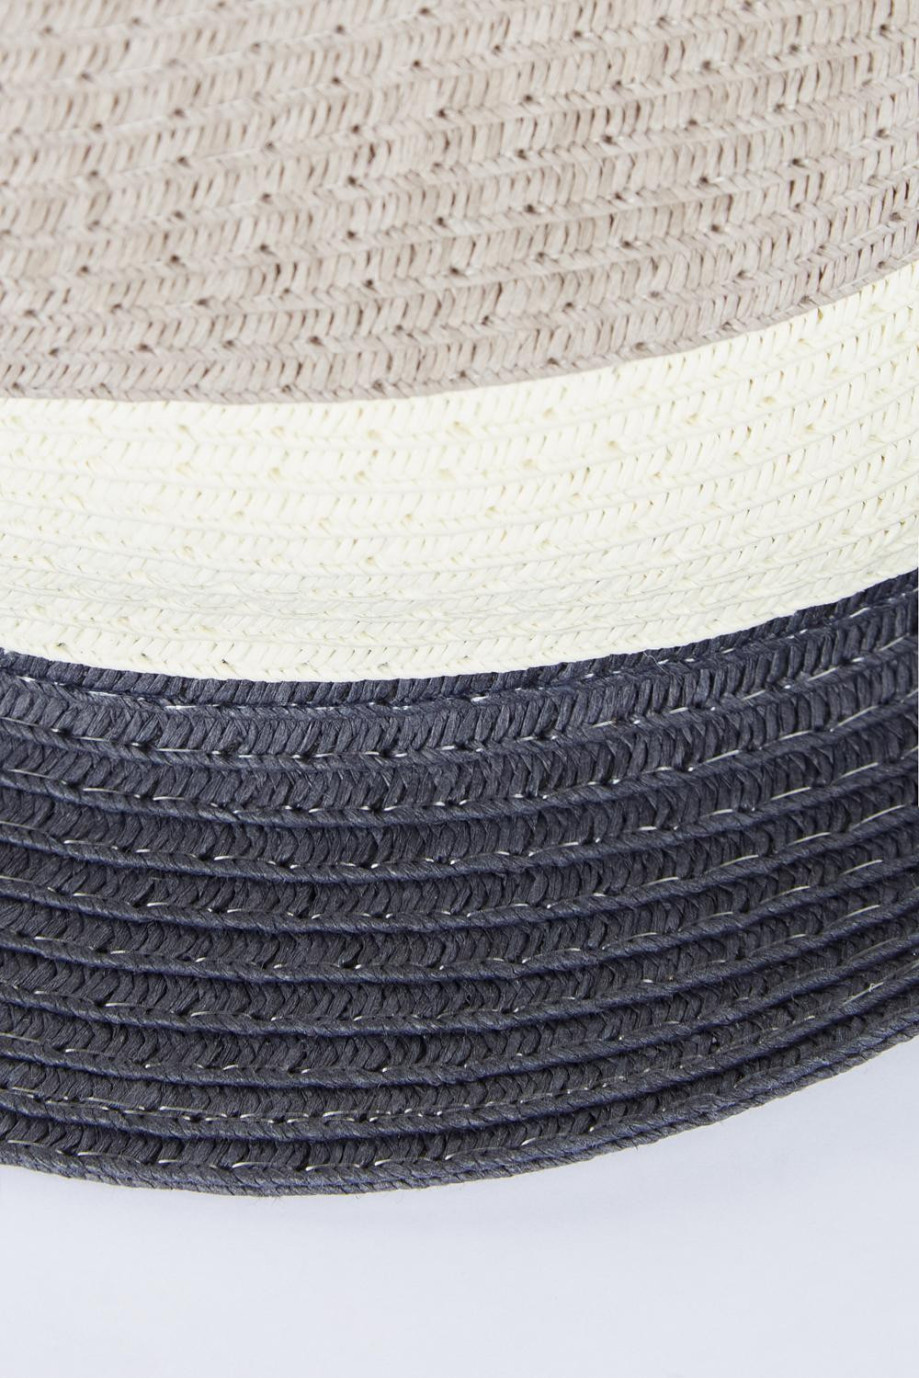 Sombrero tejido gris claro con ala corta negra